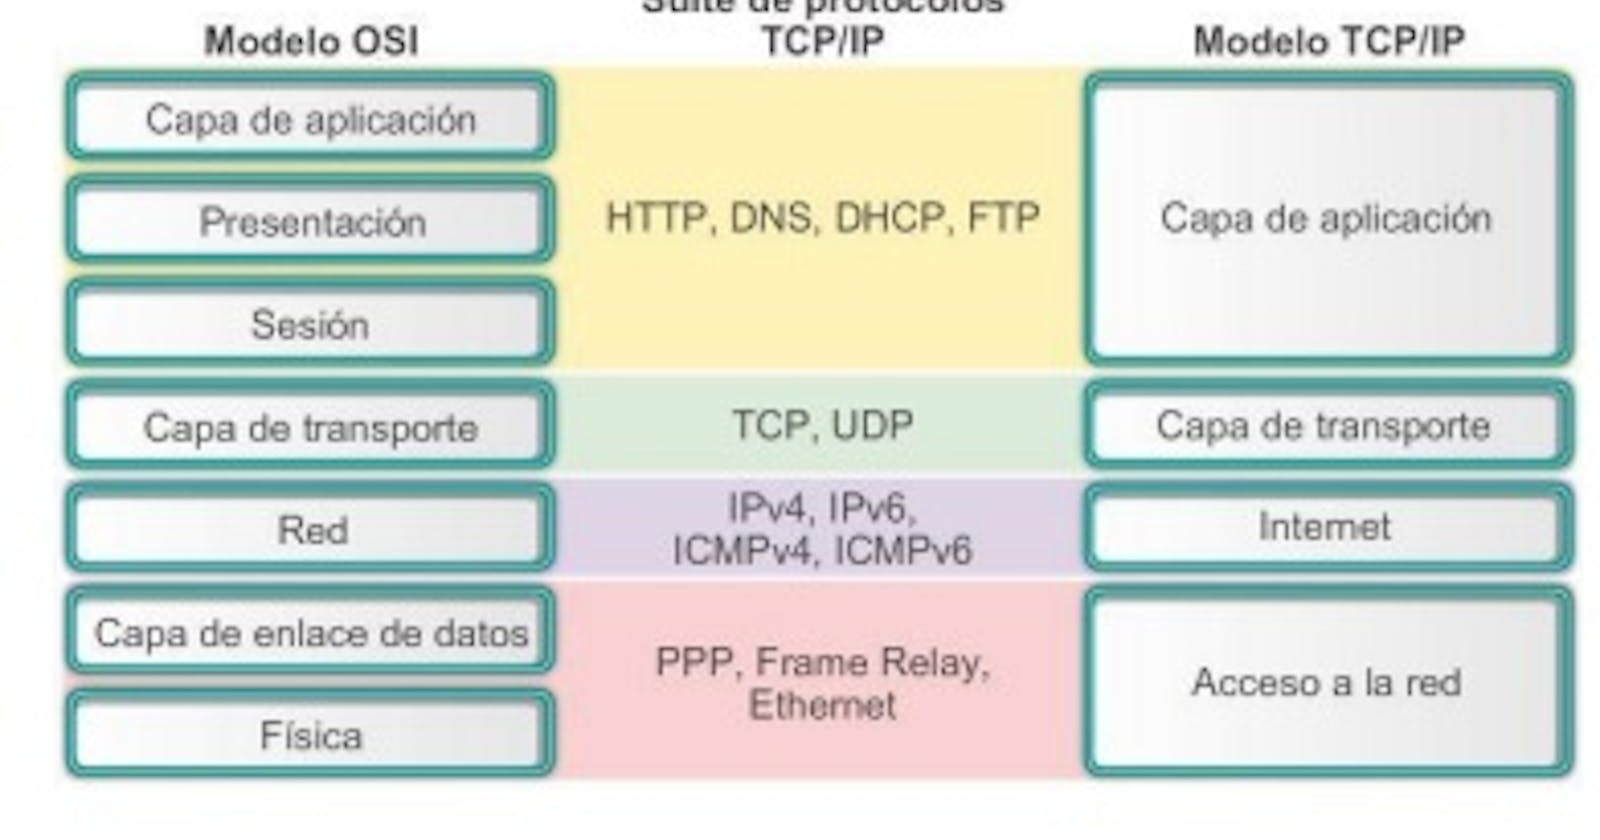 Modelo OSI vs Modelo TCP/IP